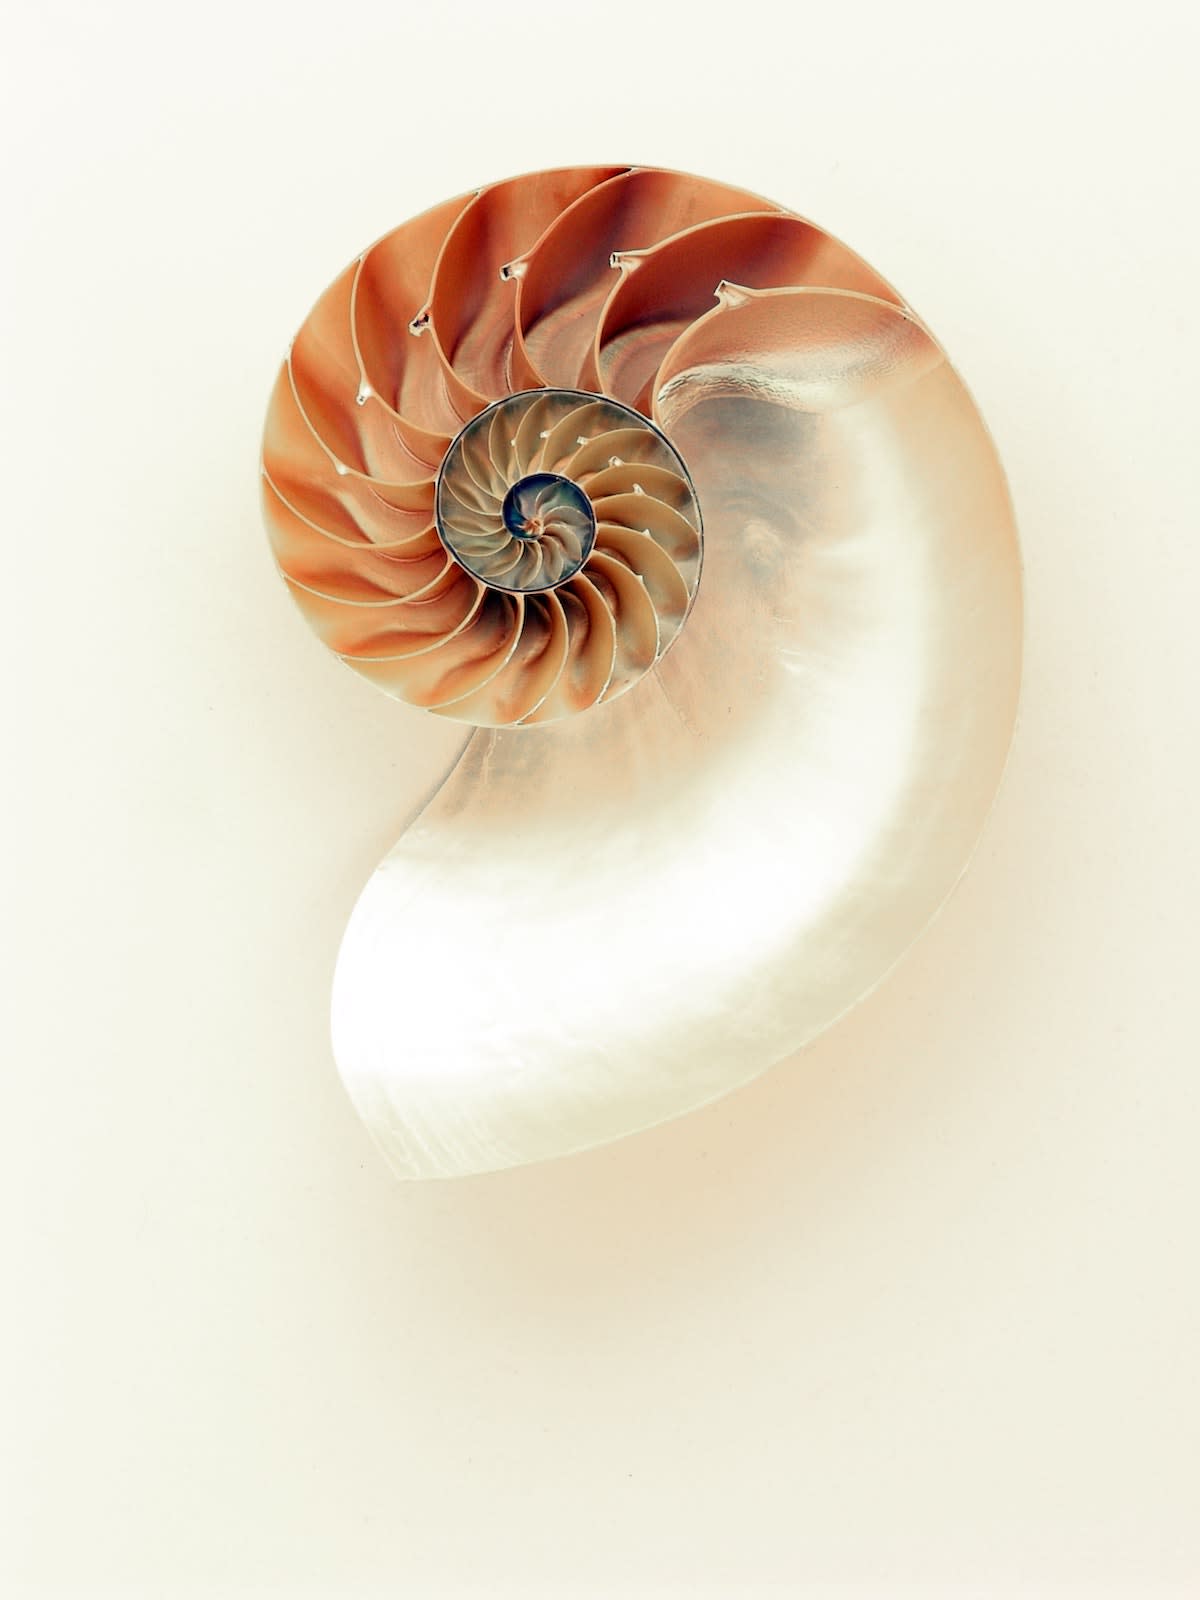 mollusc-mother-of-pearl-nautilus-33234